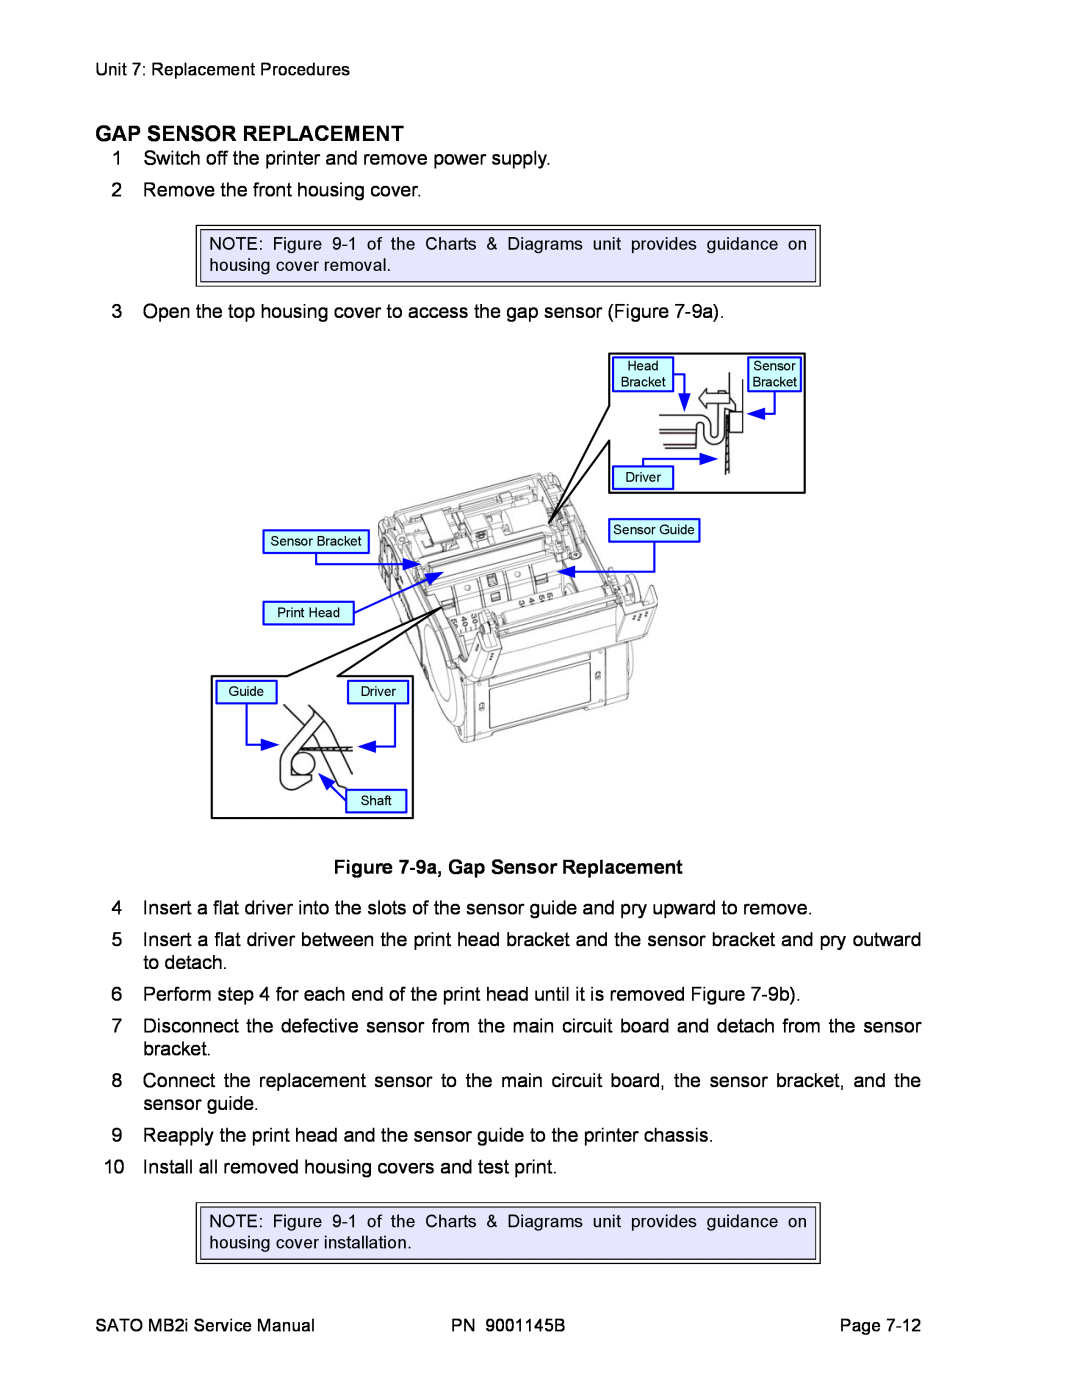 SATO 200i manual 9a, Gap Sensor Replacement 